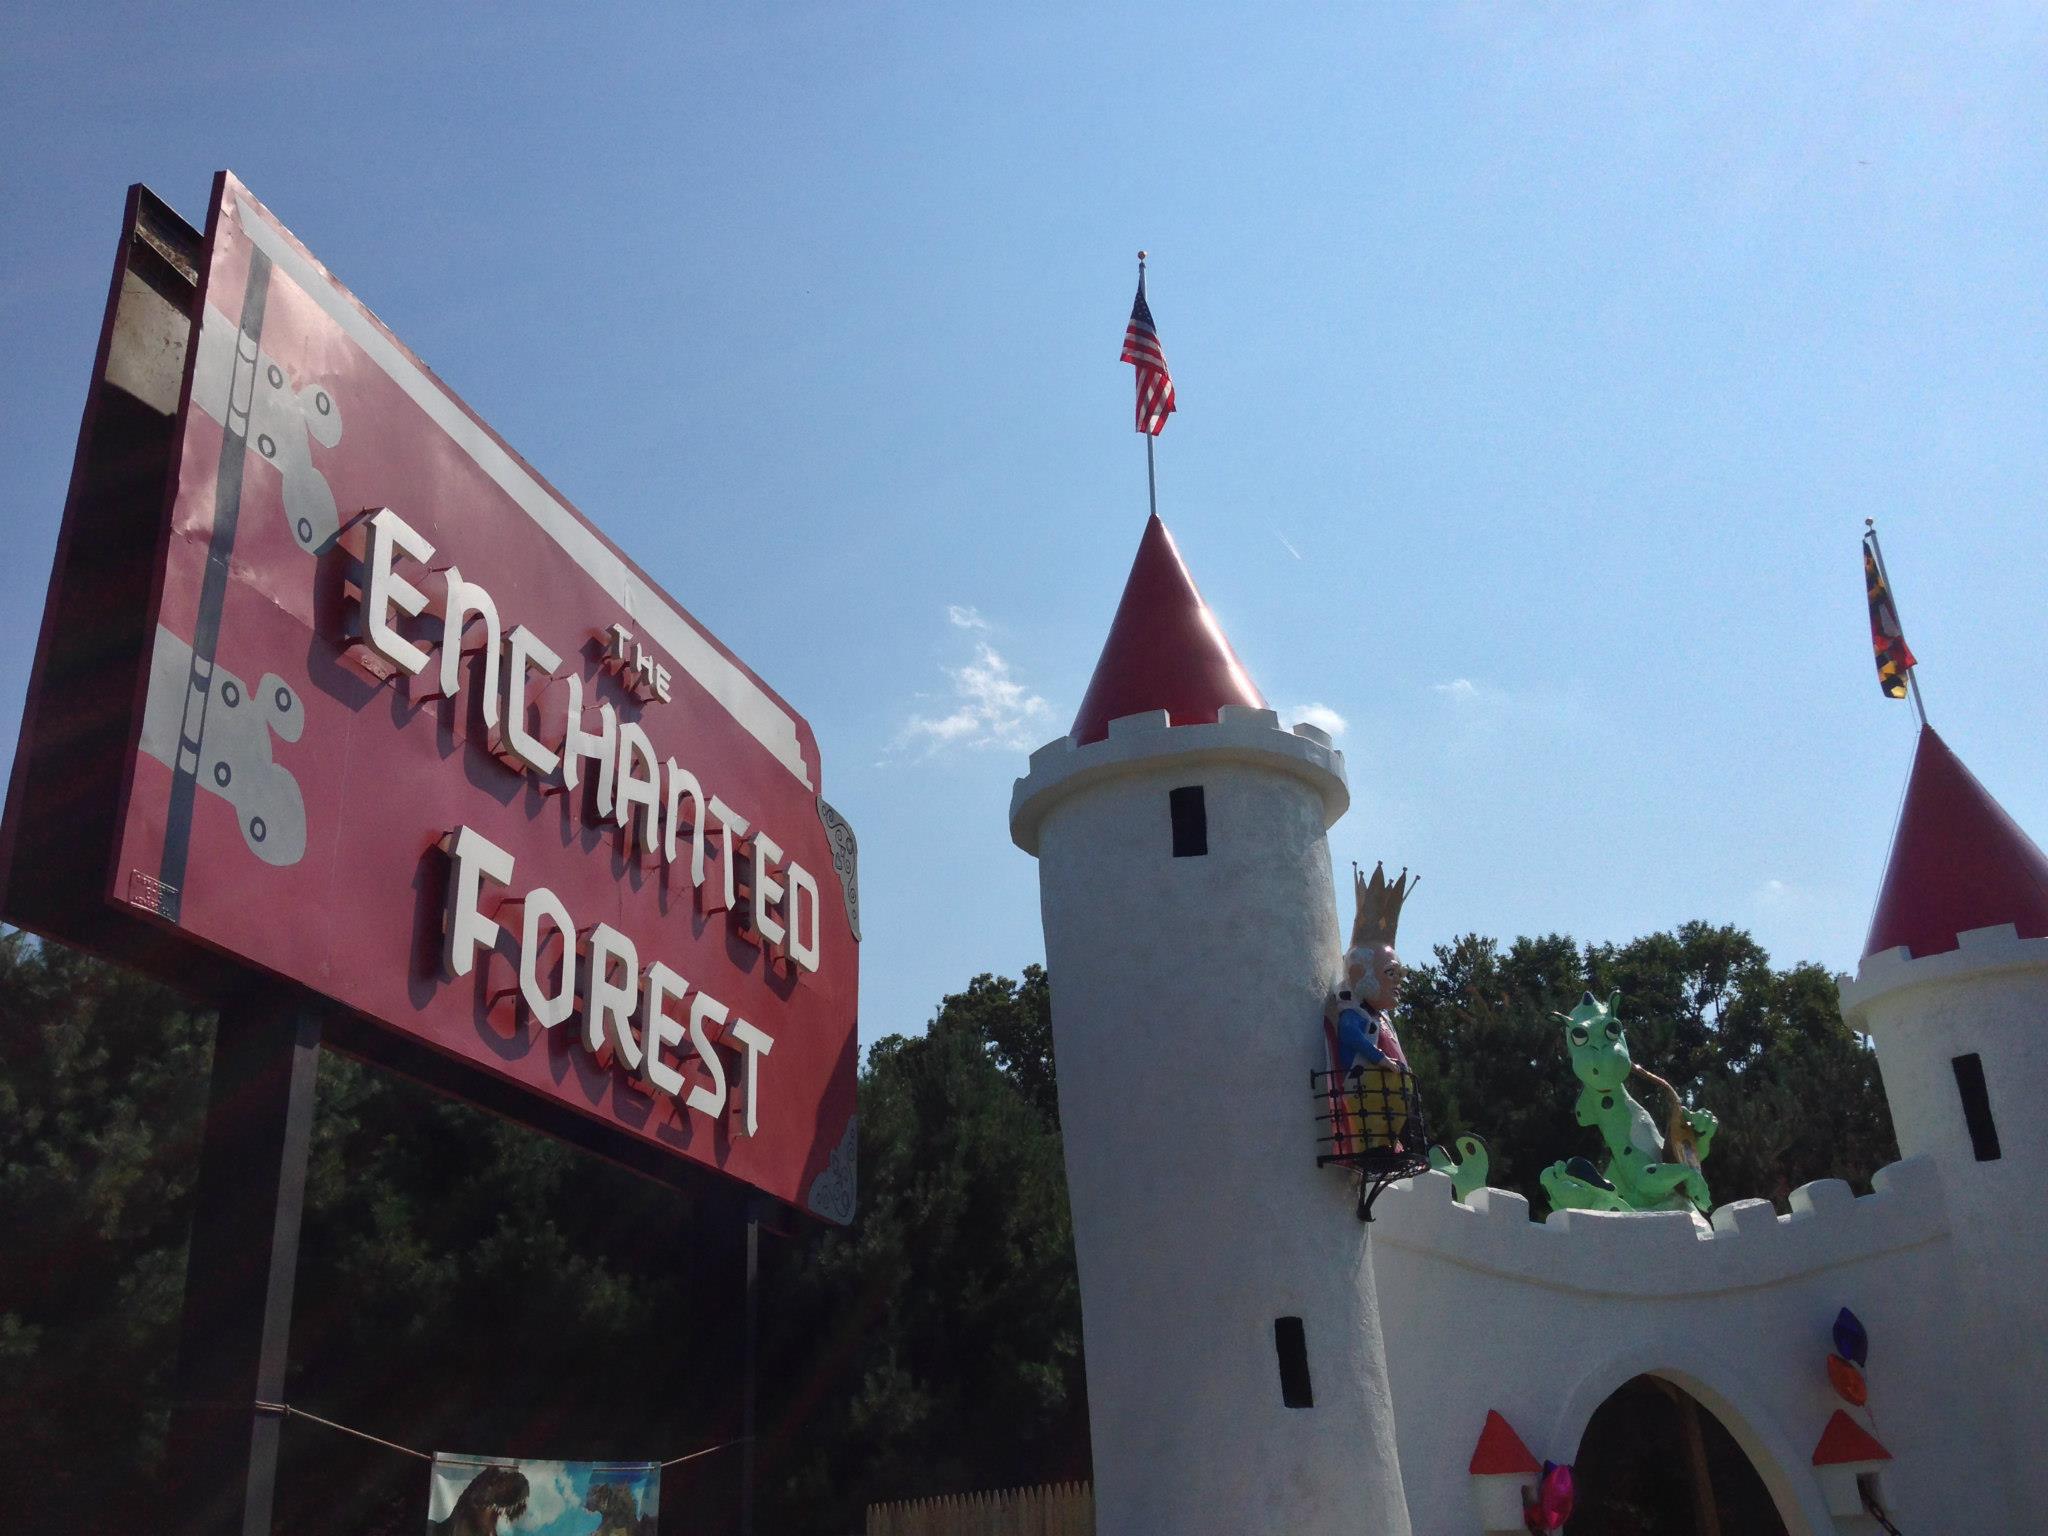 Enchanted Forest Castle